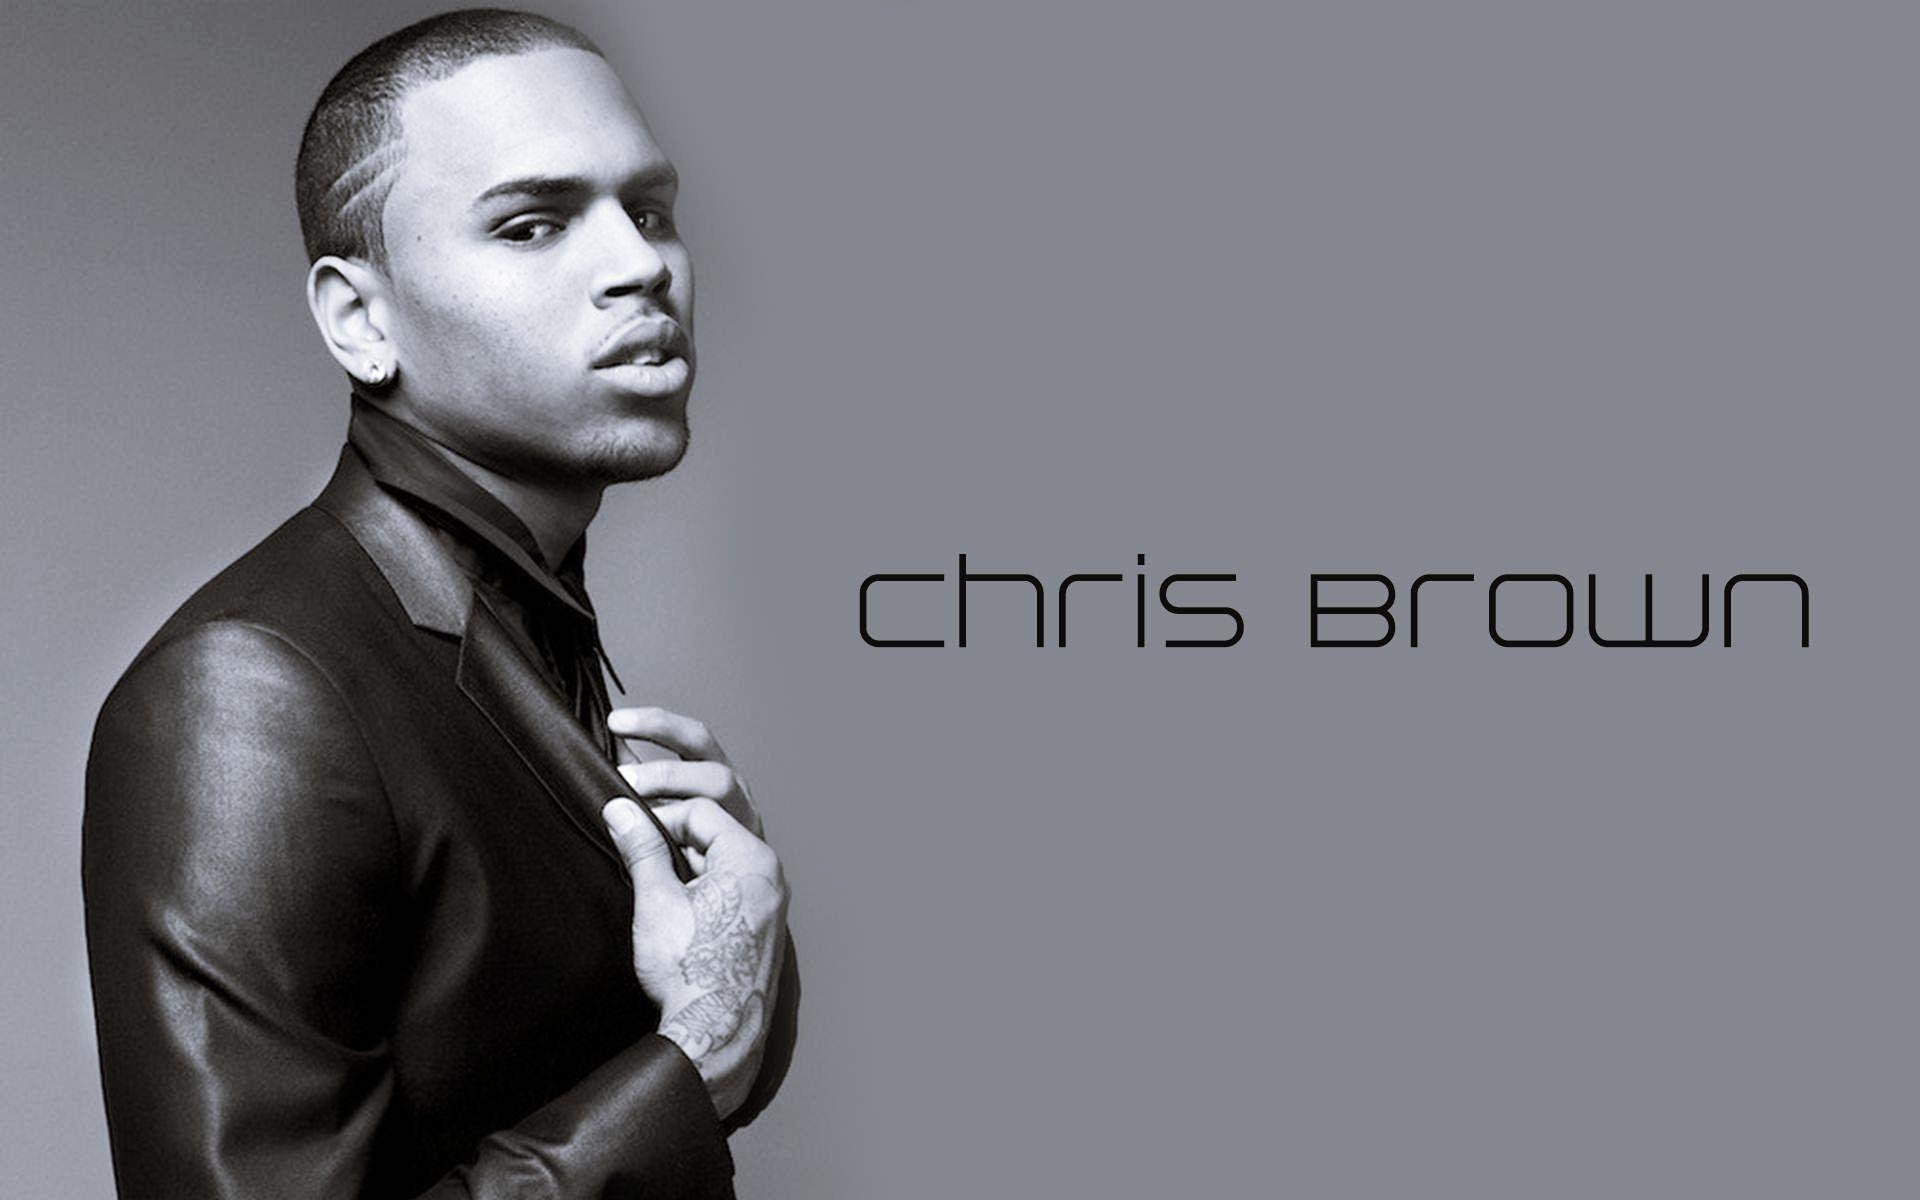 Chris Brown Background. Wallpaper, Background, Image, Art Photo